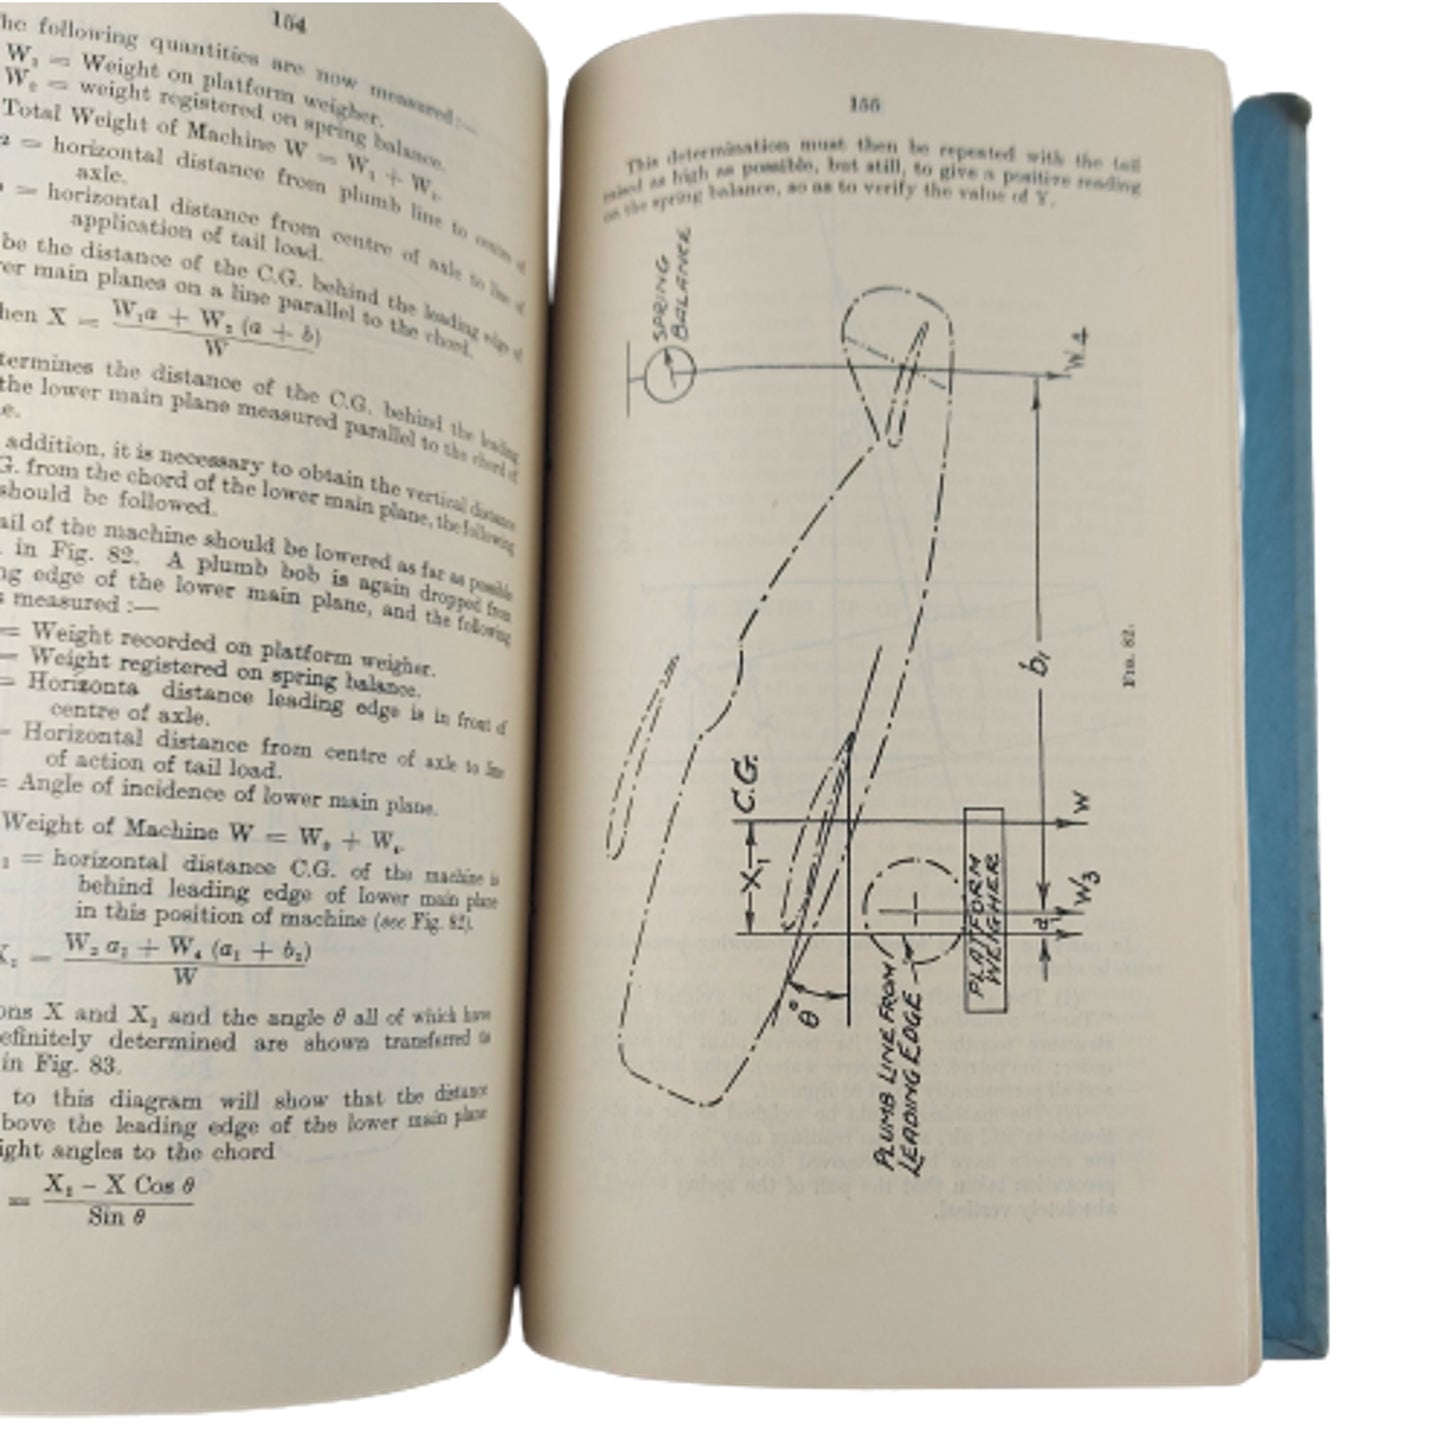 1926 RAF Royal Air Force Flight Training Manual